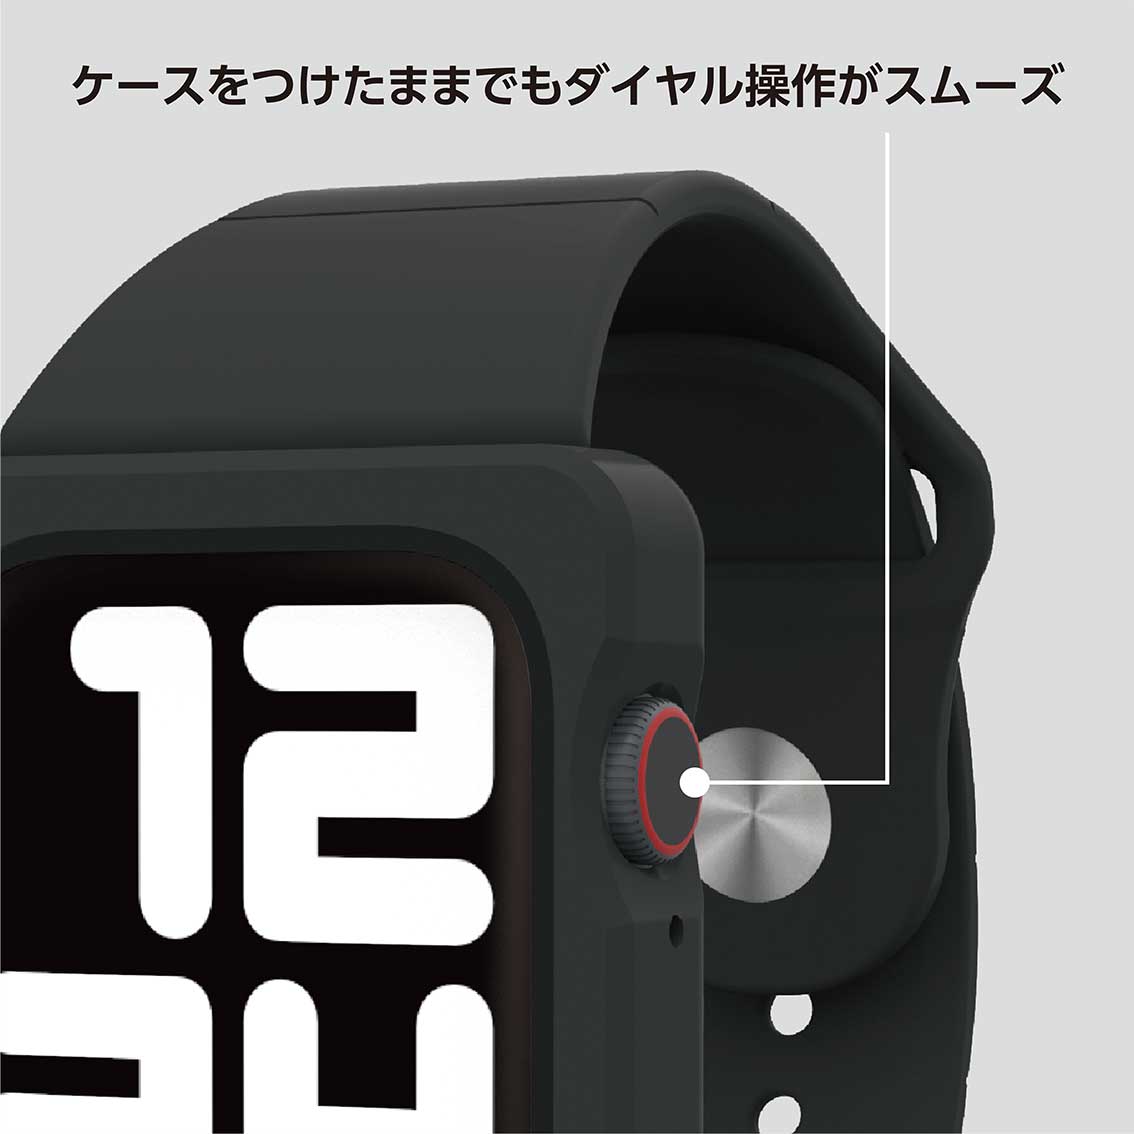 Apple Watch Series 6/5/4/SE アップルウォッチ ケース一体型バンド 